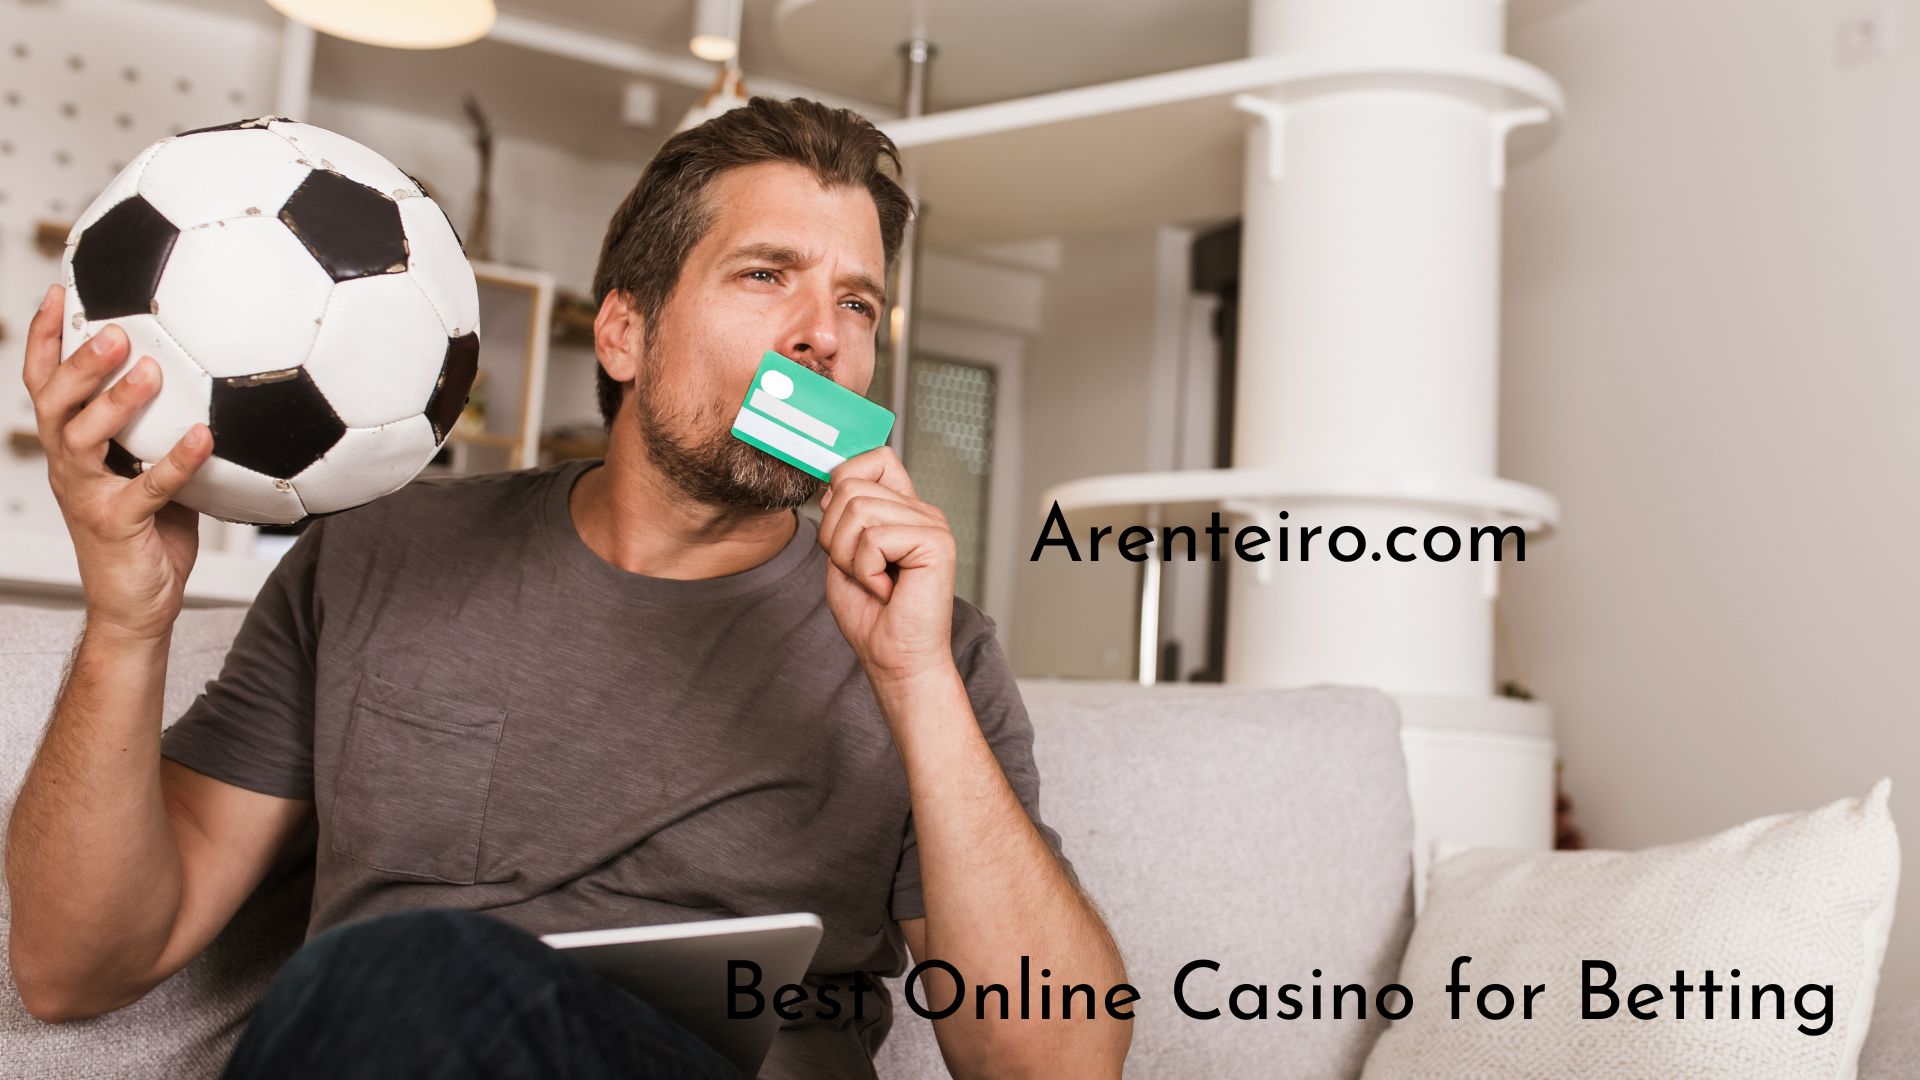 Best Online Casino for Betting